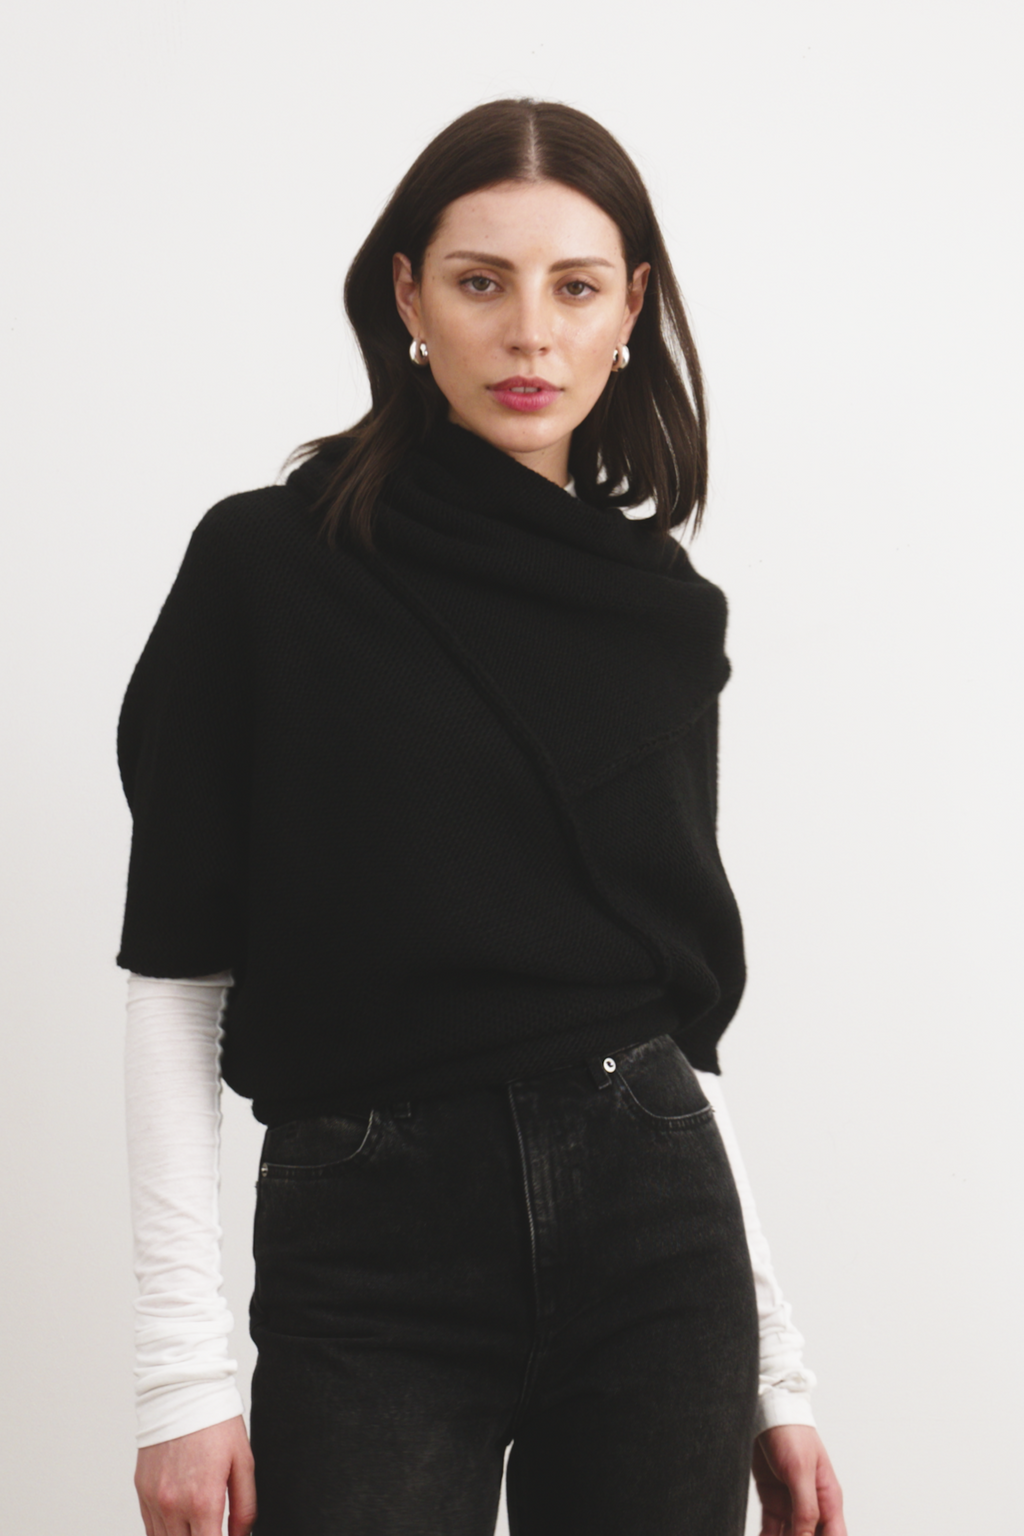 Black Short Sleeve Asymmetric Pullover - Palmer Knit Top | Marcella